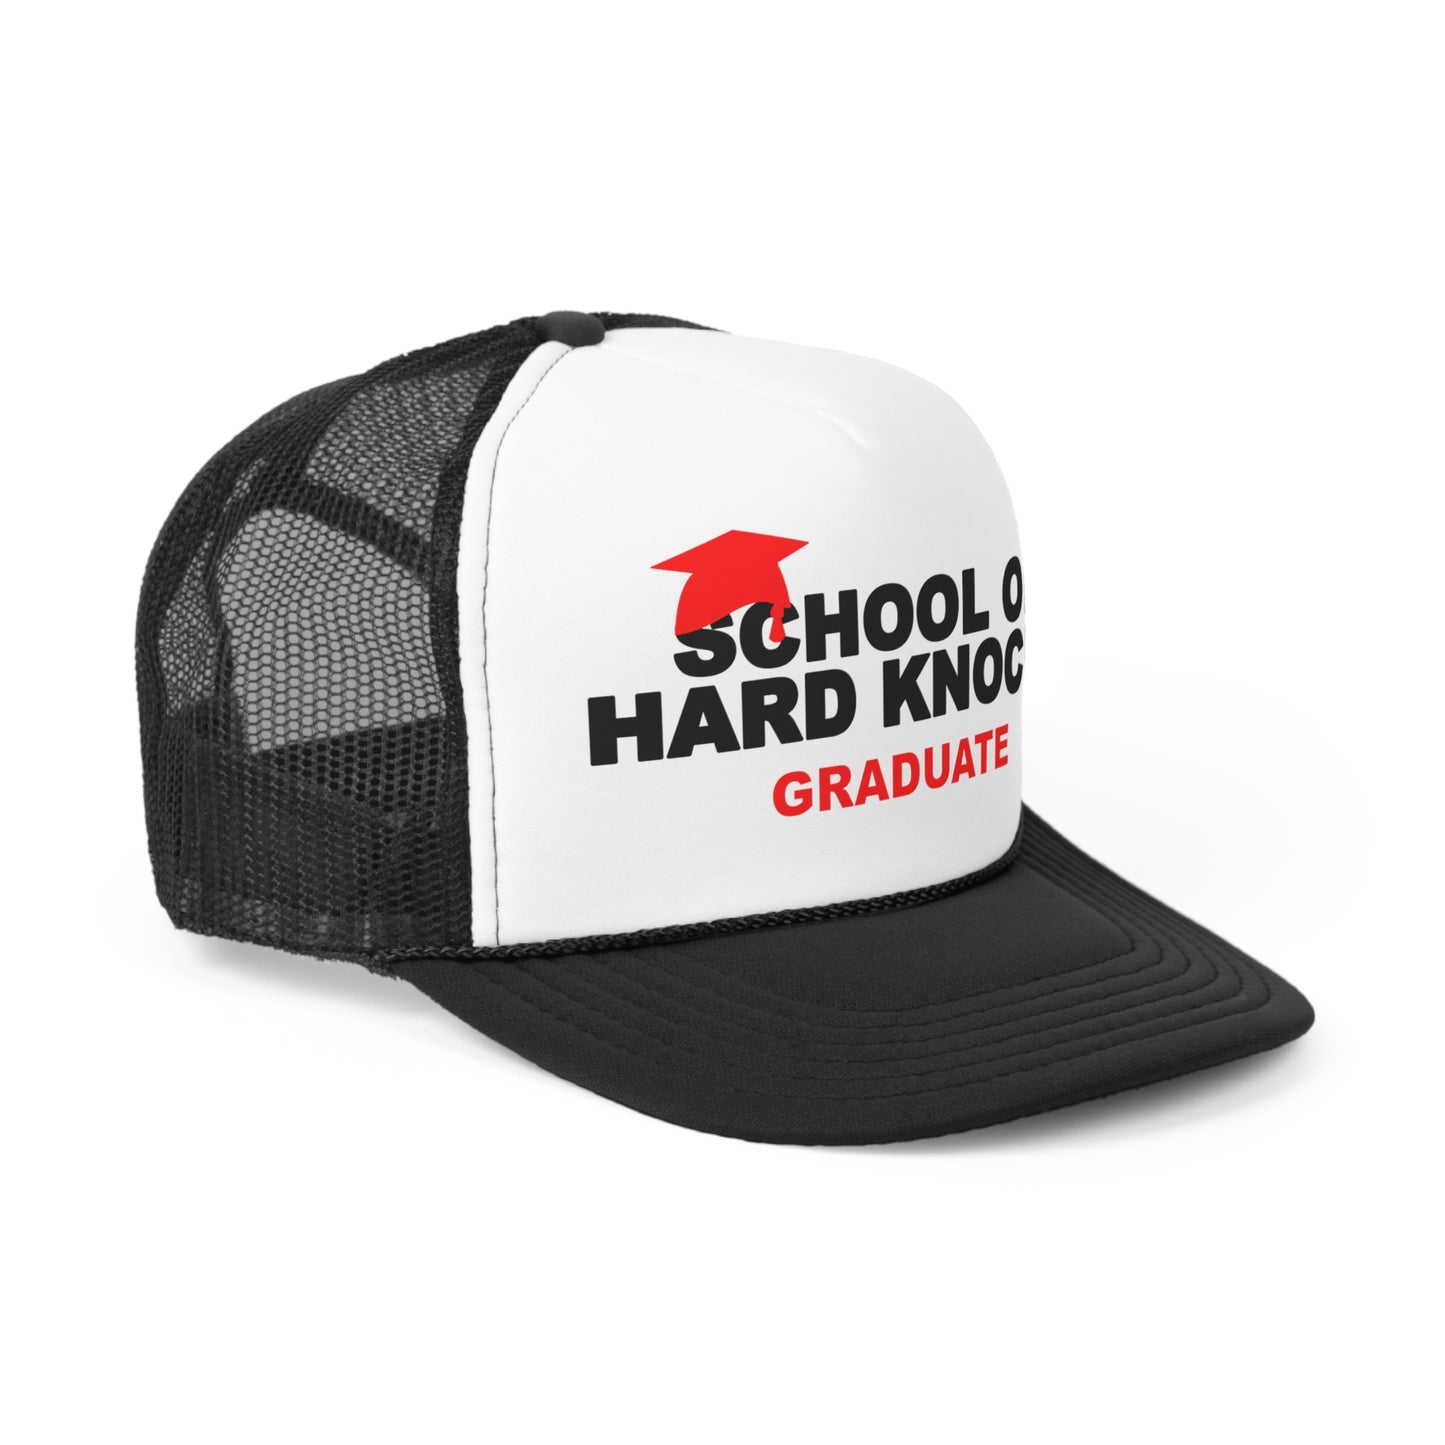 School of Hard Knocks Graduate Snapback Trucker Hat